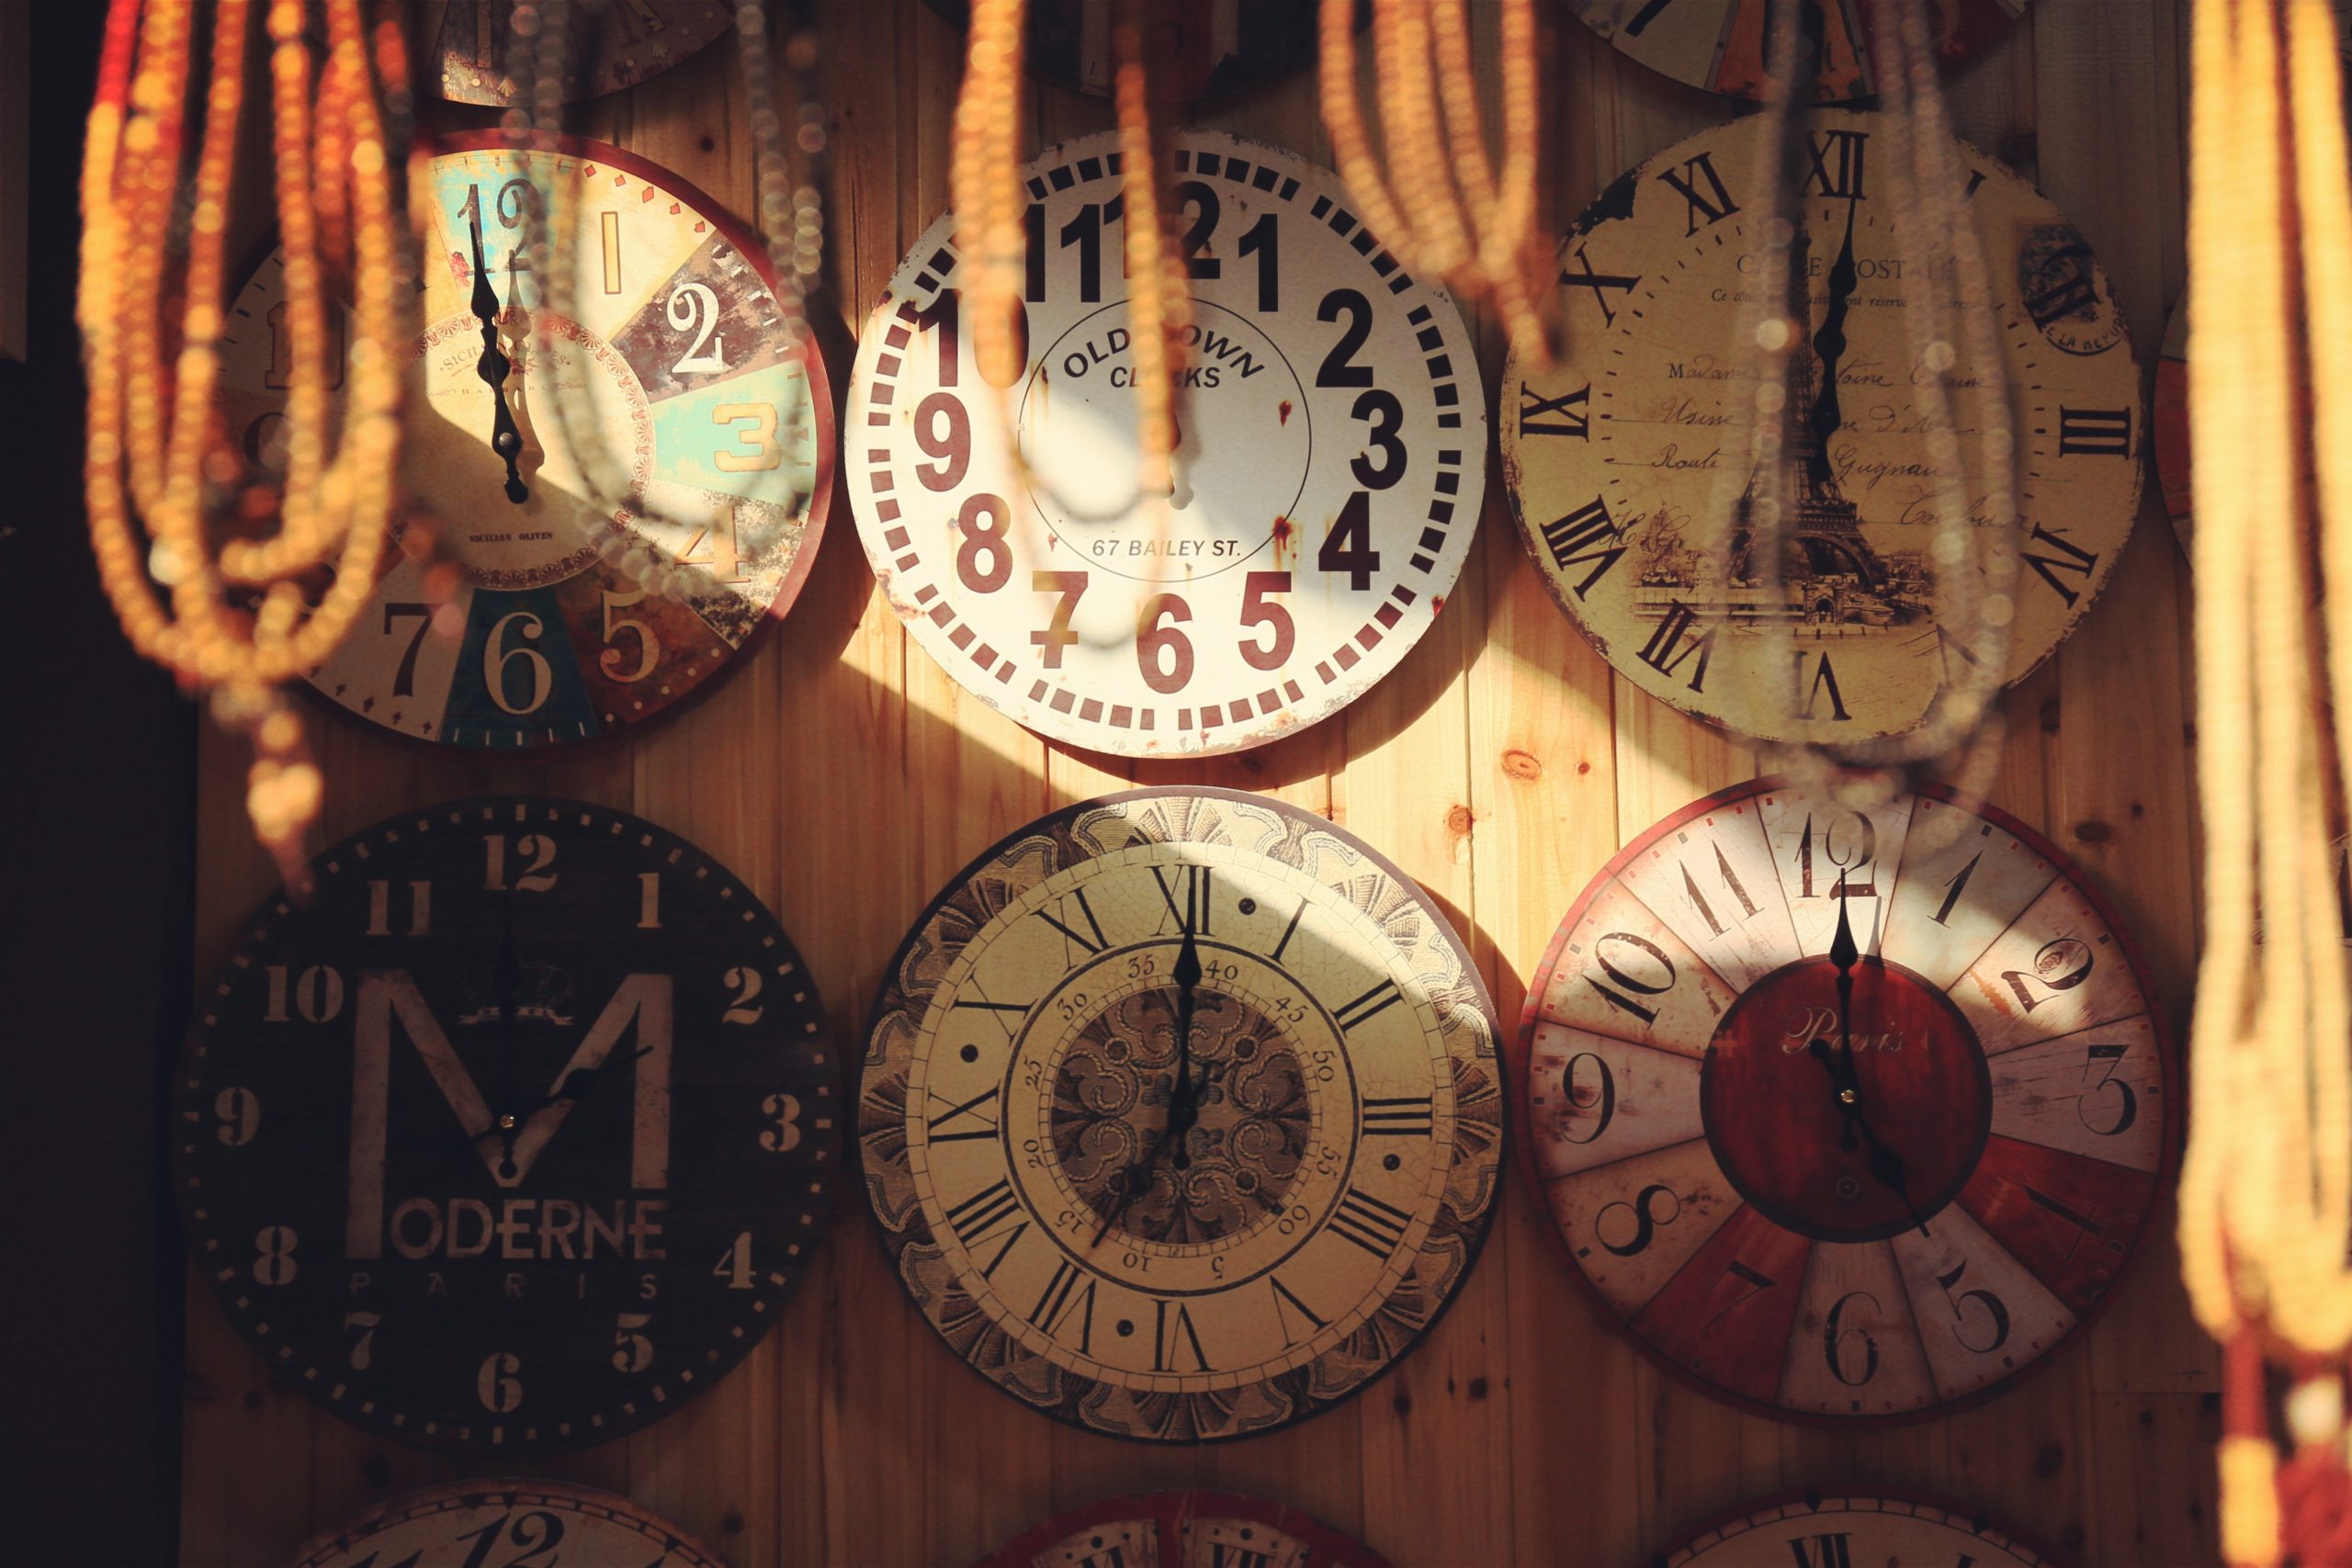 A wall of vintage clocks.